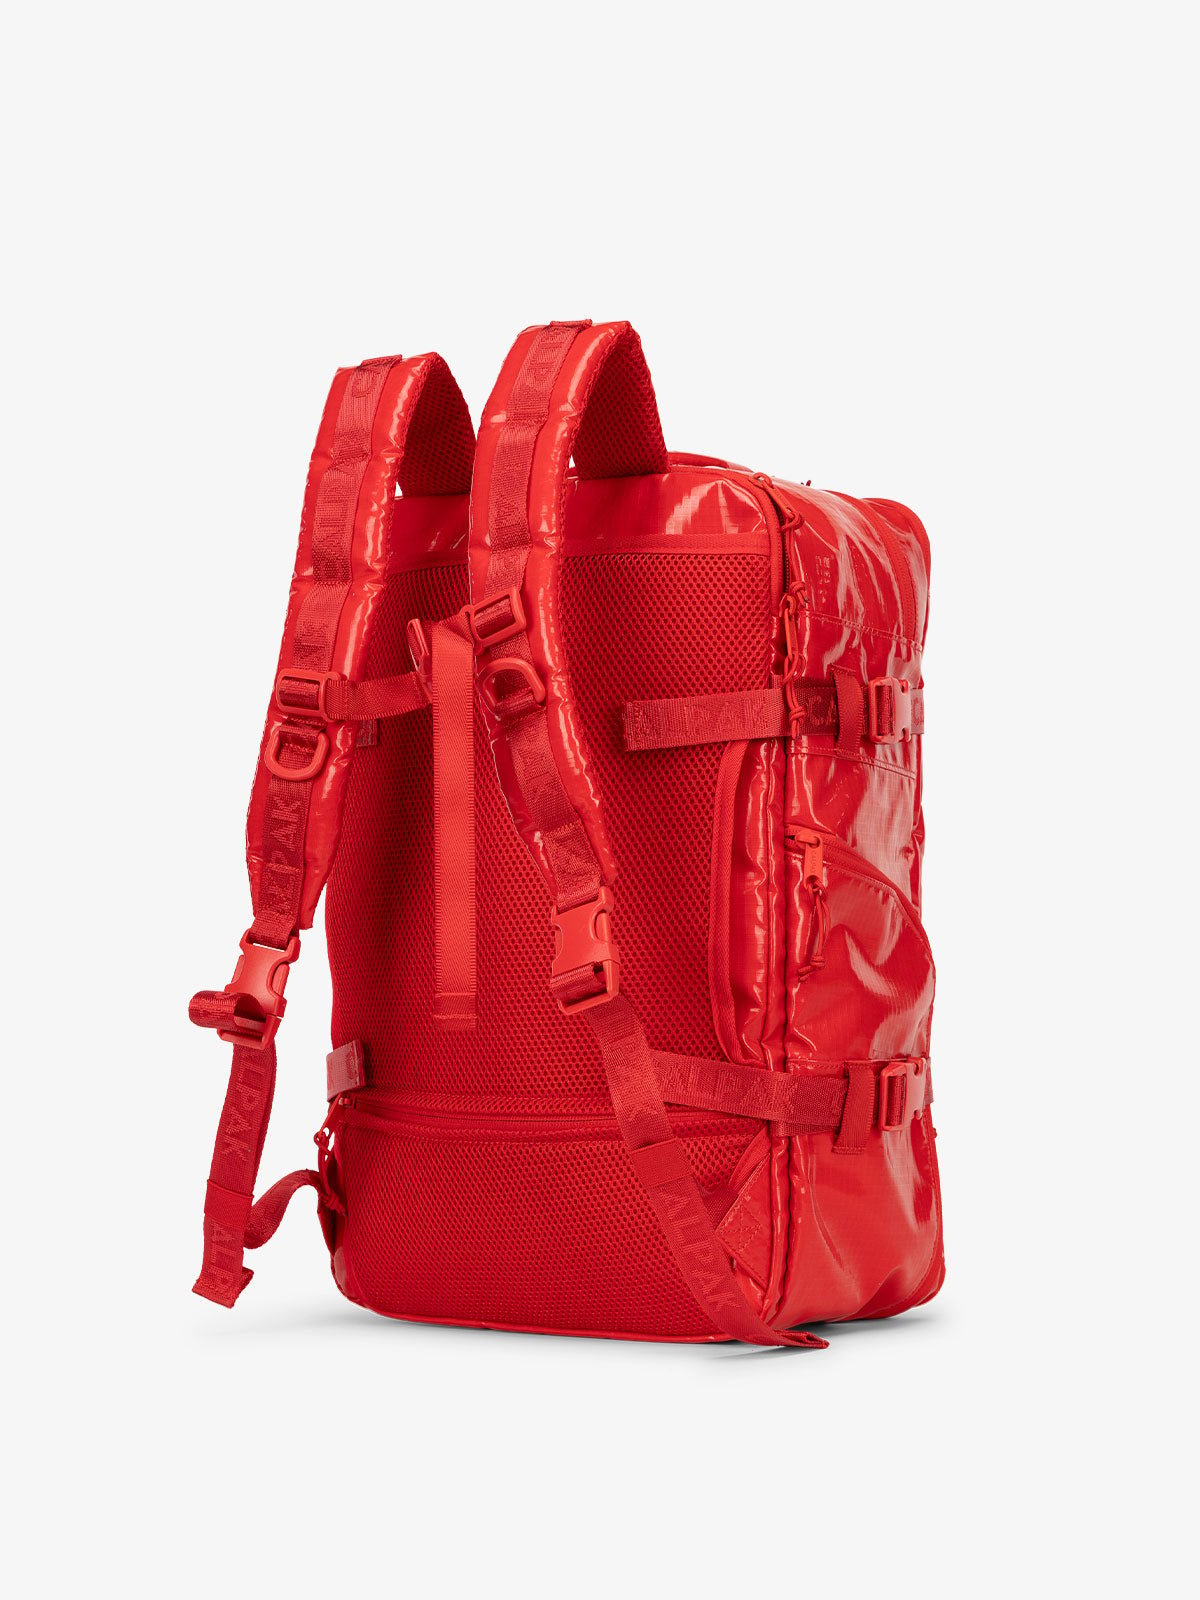 CALPAK Terra 26L Laptop Backpack Duffel with detachable adjustable shoulder strap in red flame